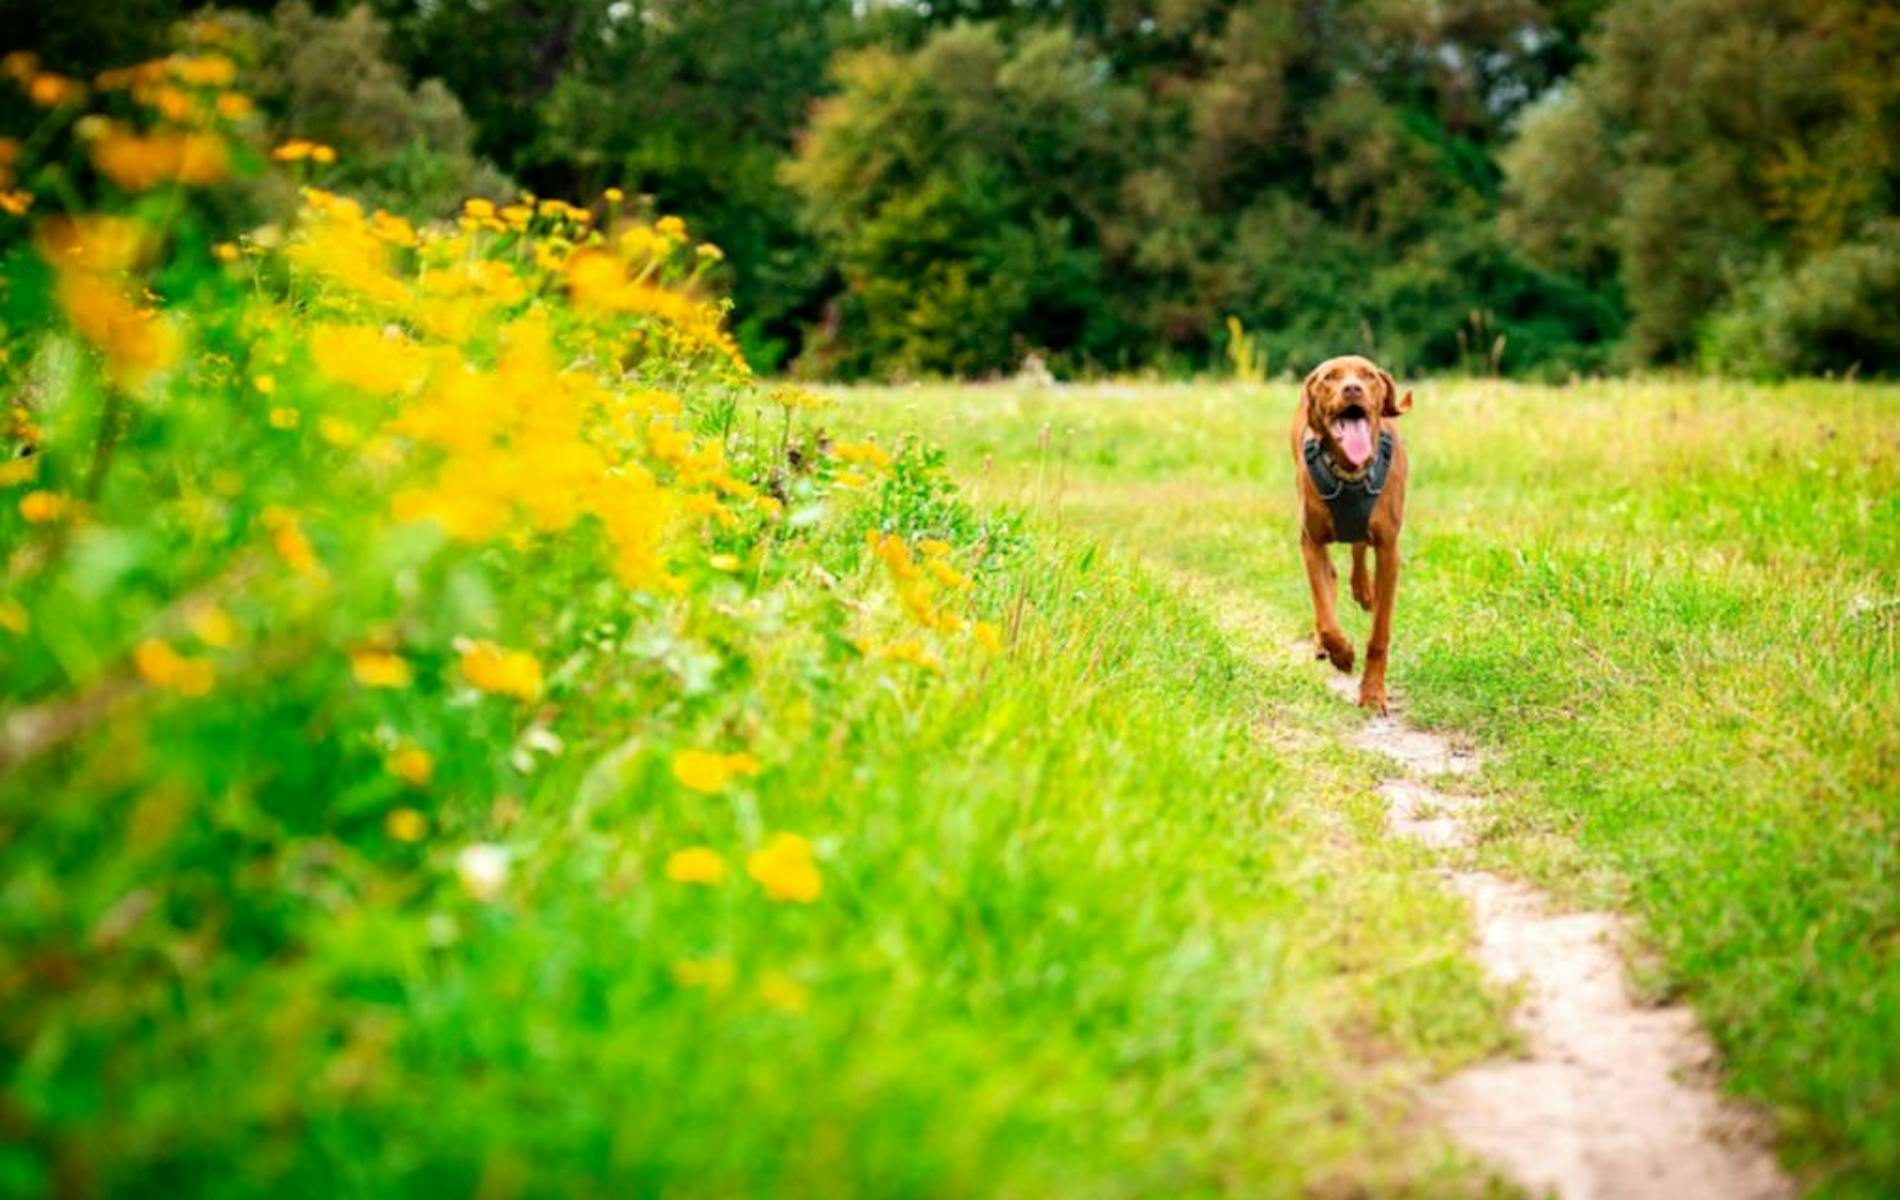 Dog running through field